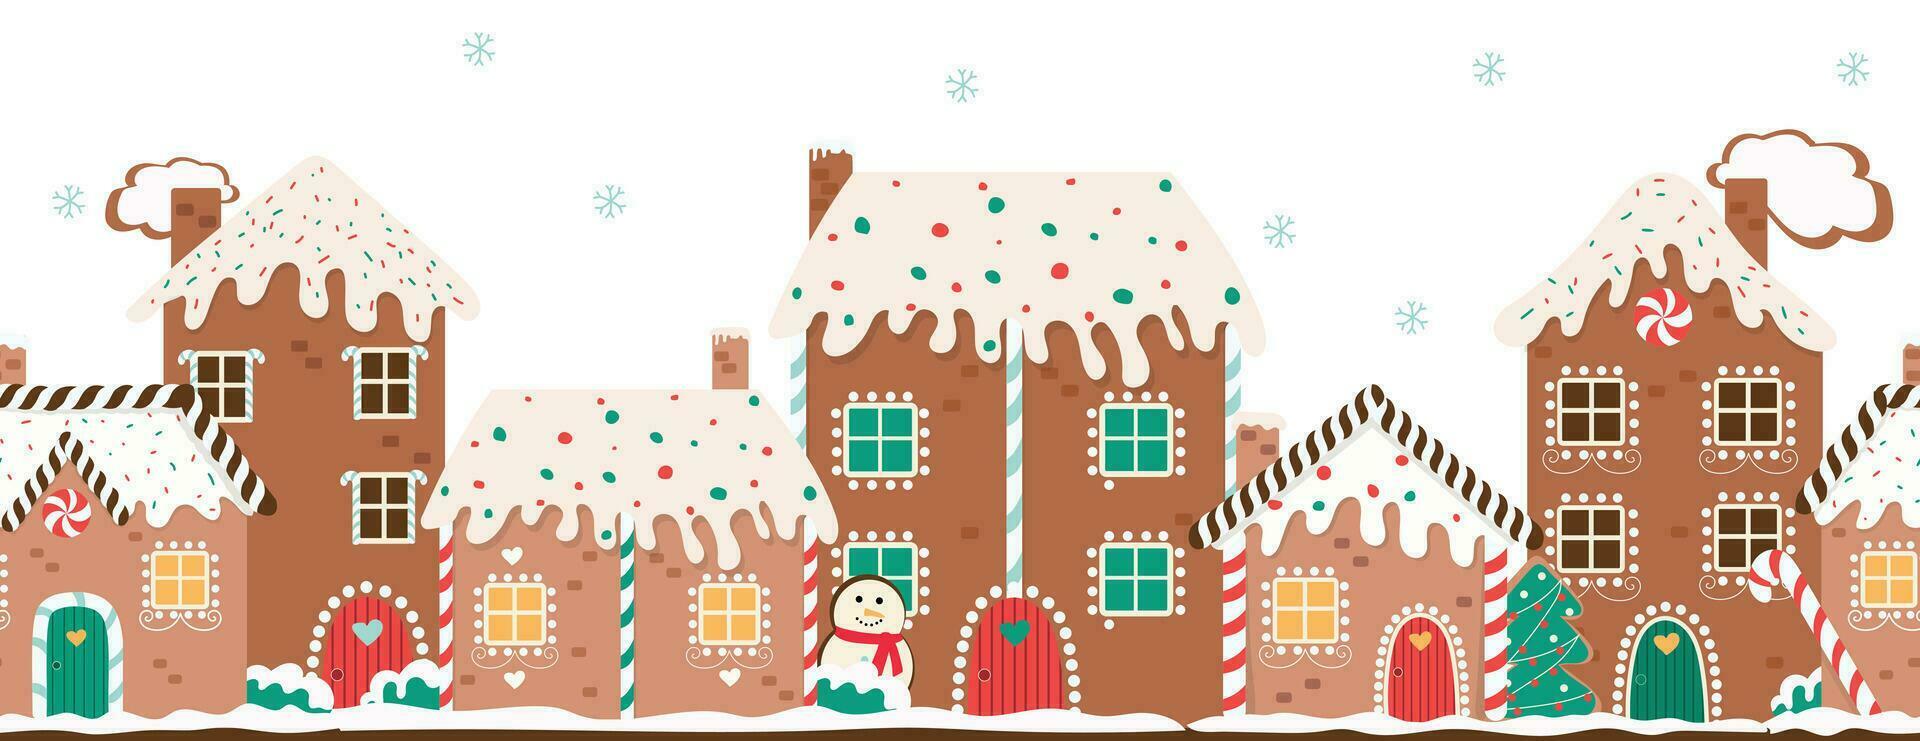 Gingerbread houses christmas border. vector